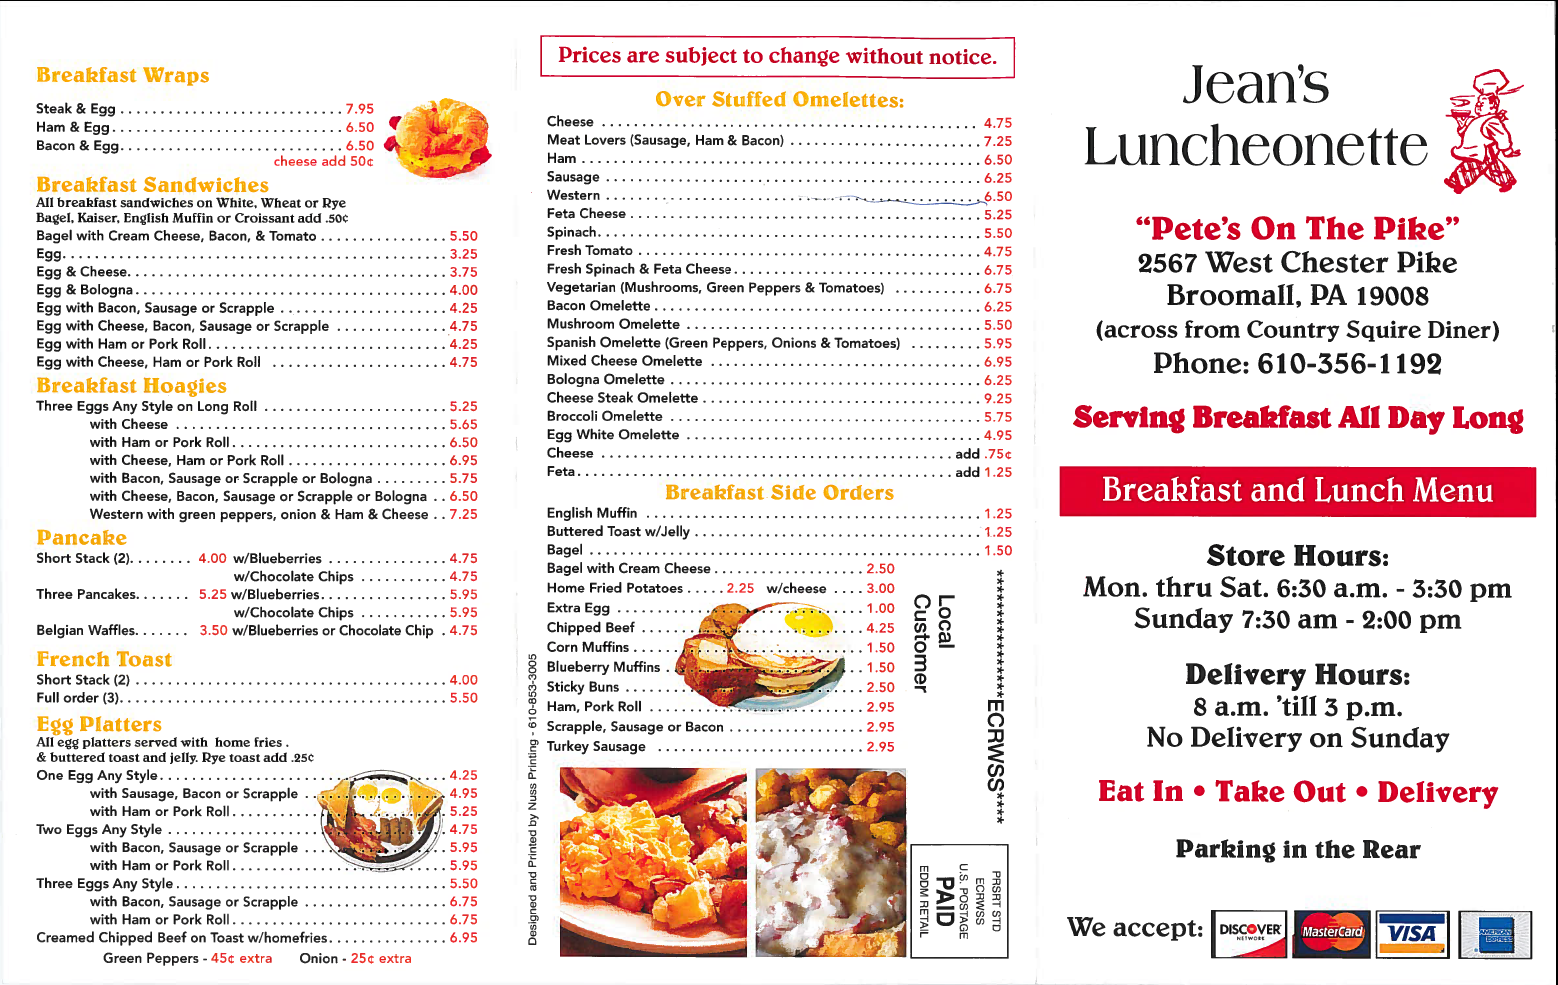 Jean's menu page 1